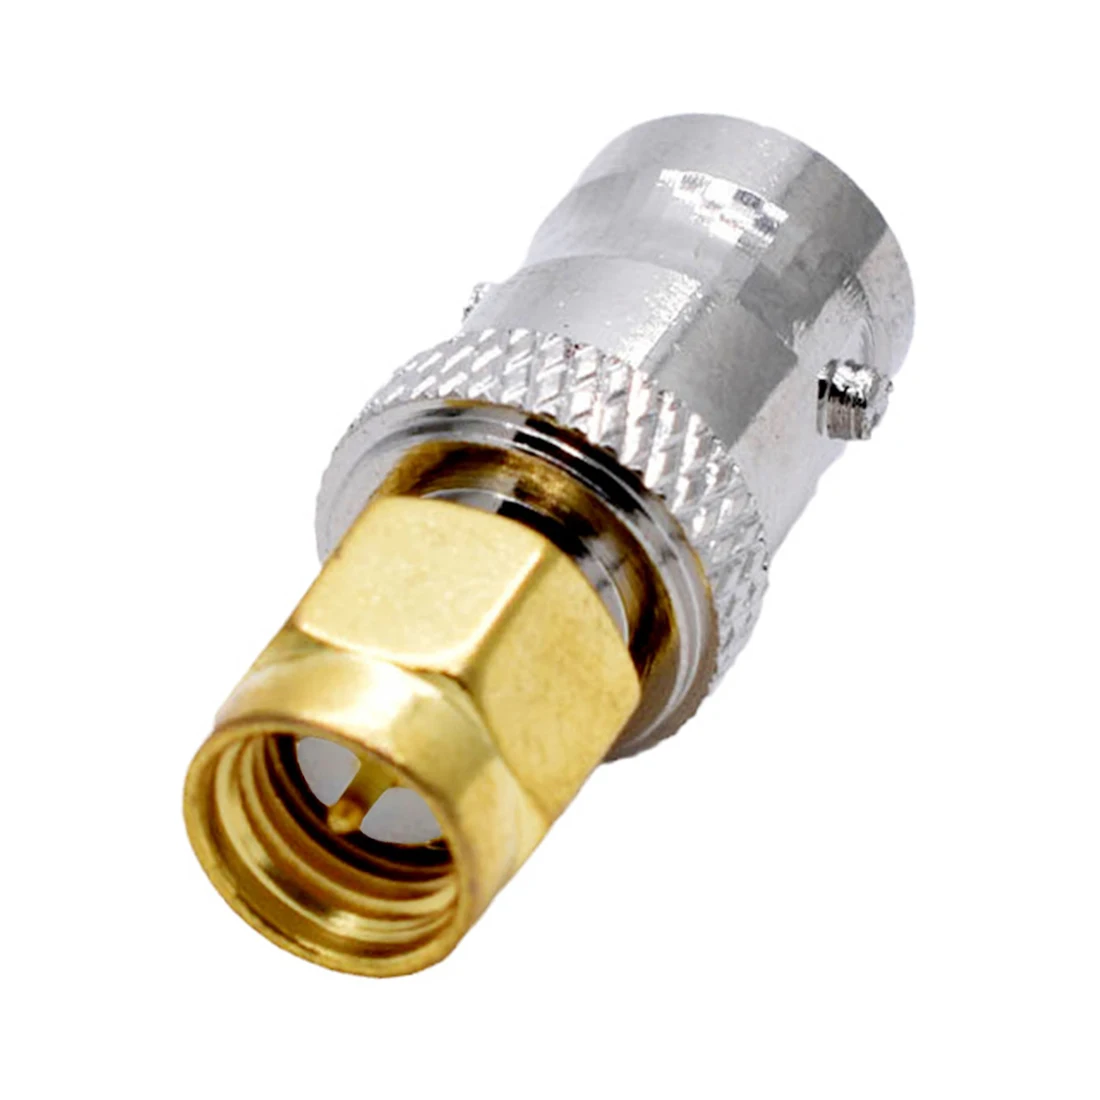 1pc BNC Female Jack  to  SMA  Male Plug  RF Coax Adapter Modem Convertor Straight Nickelplated  NEW Wholesale